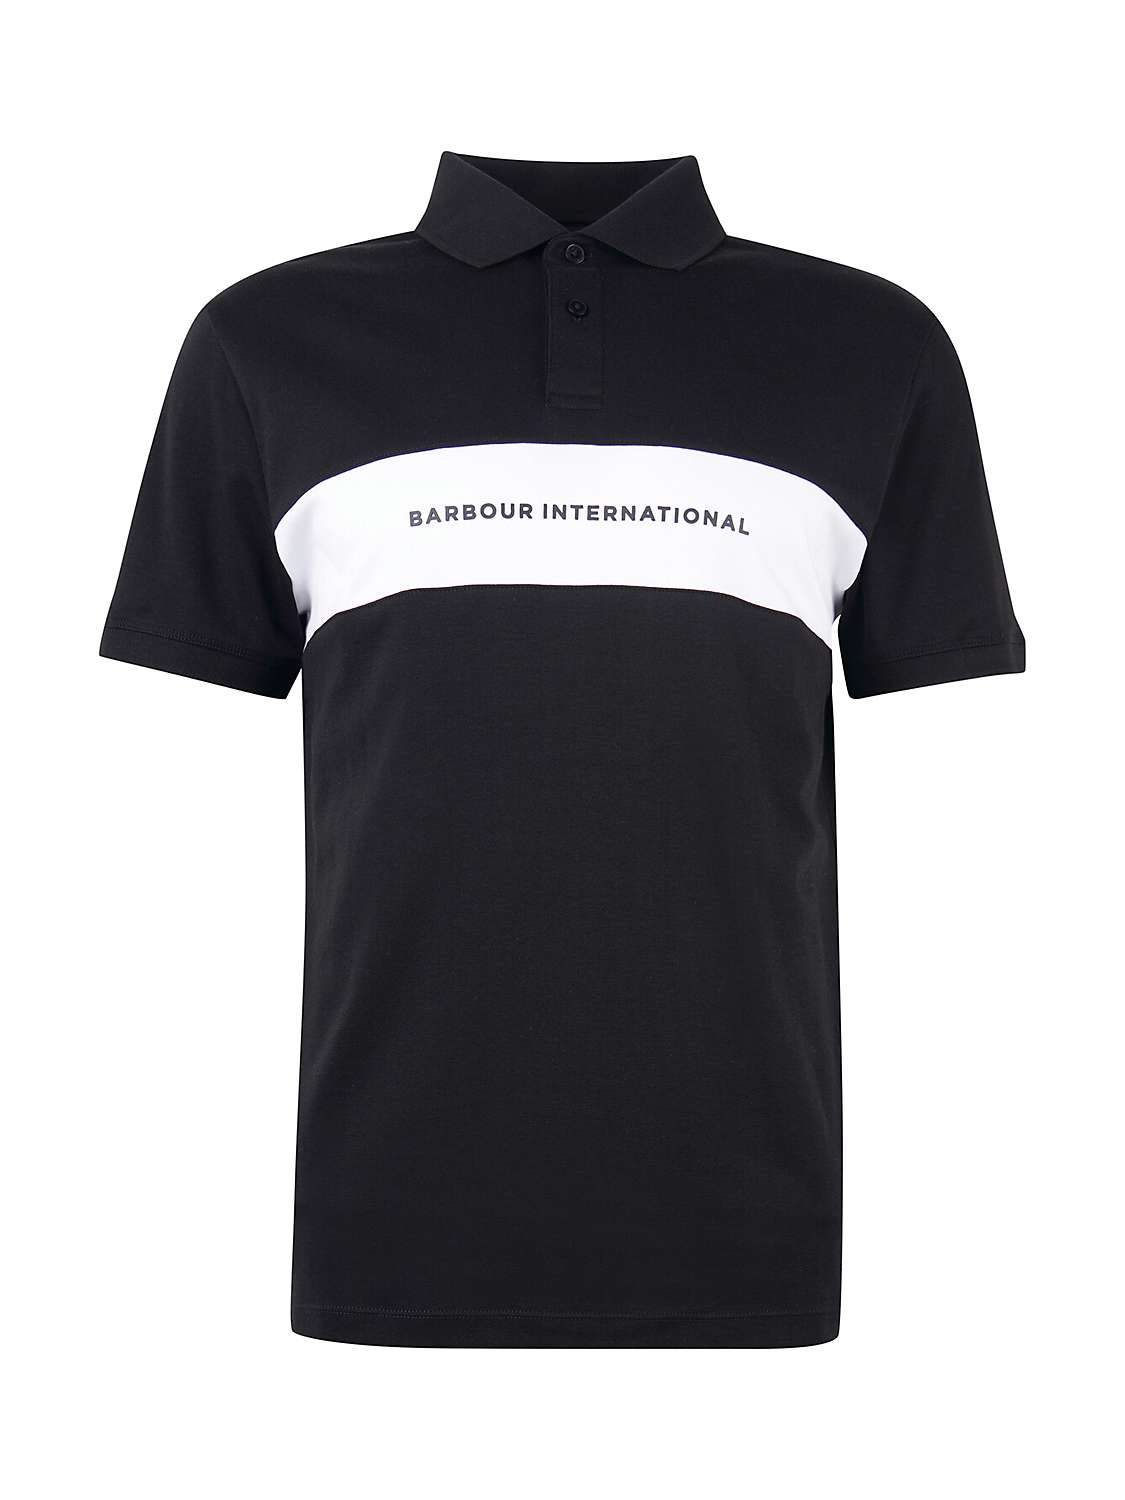 Barbour International Bar Polo Shirt at John Lewis & Partners